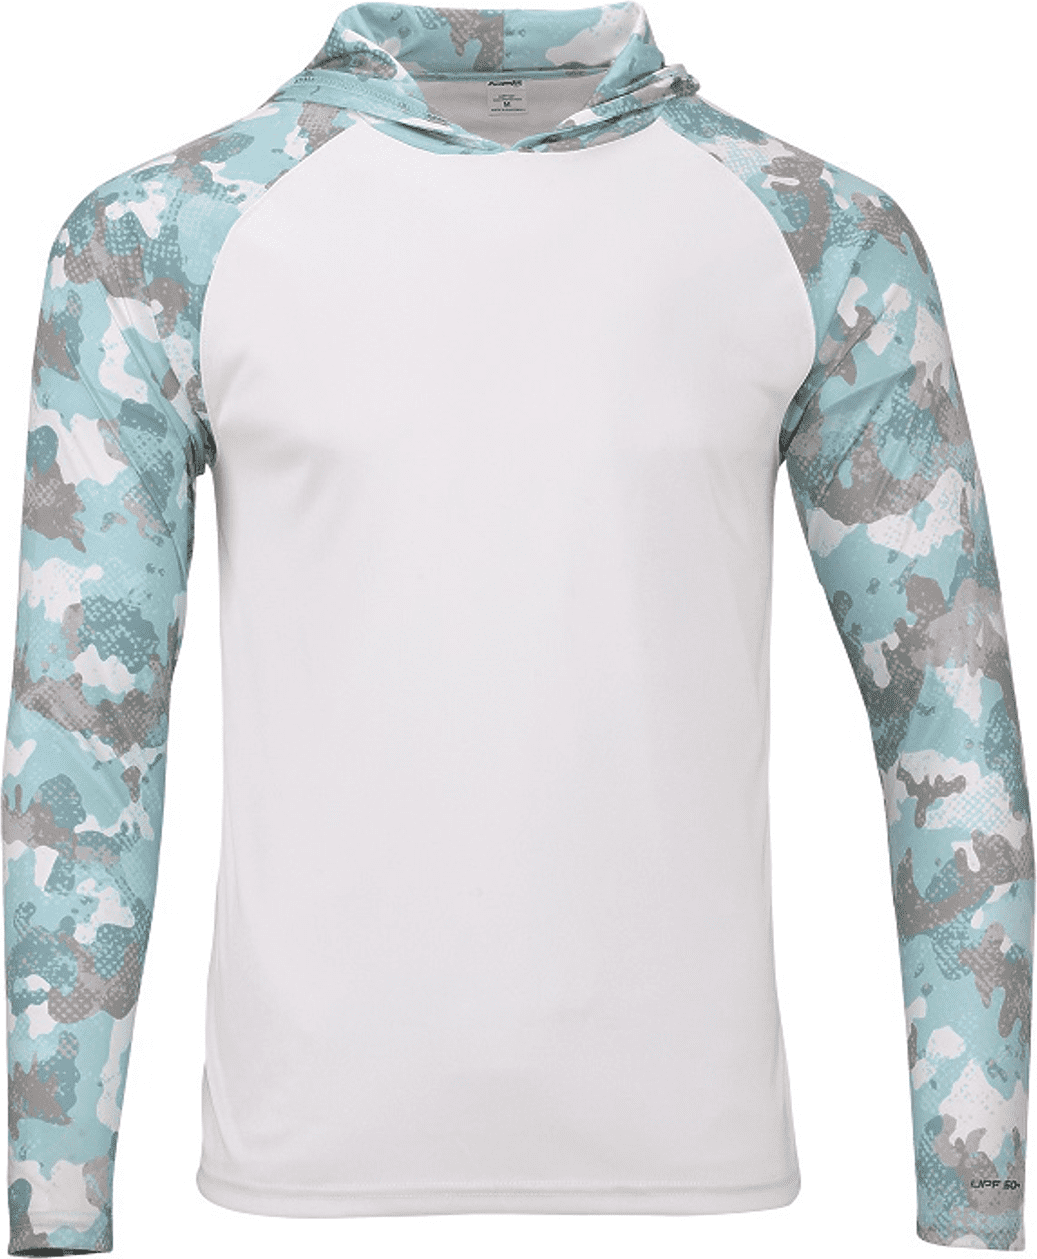 Paragon 240 Tortuga Extreme Performance Hooded T-Shirt - Blue Mist, XL